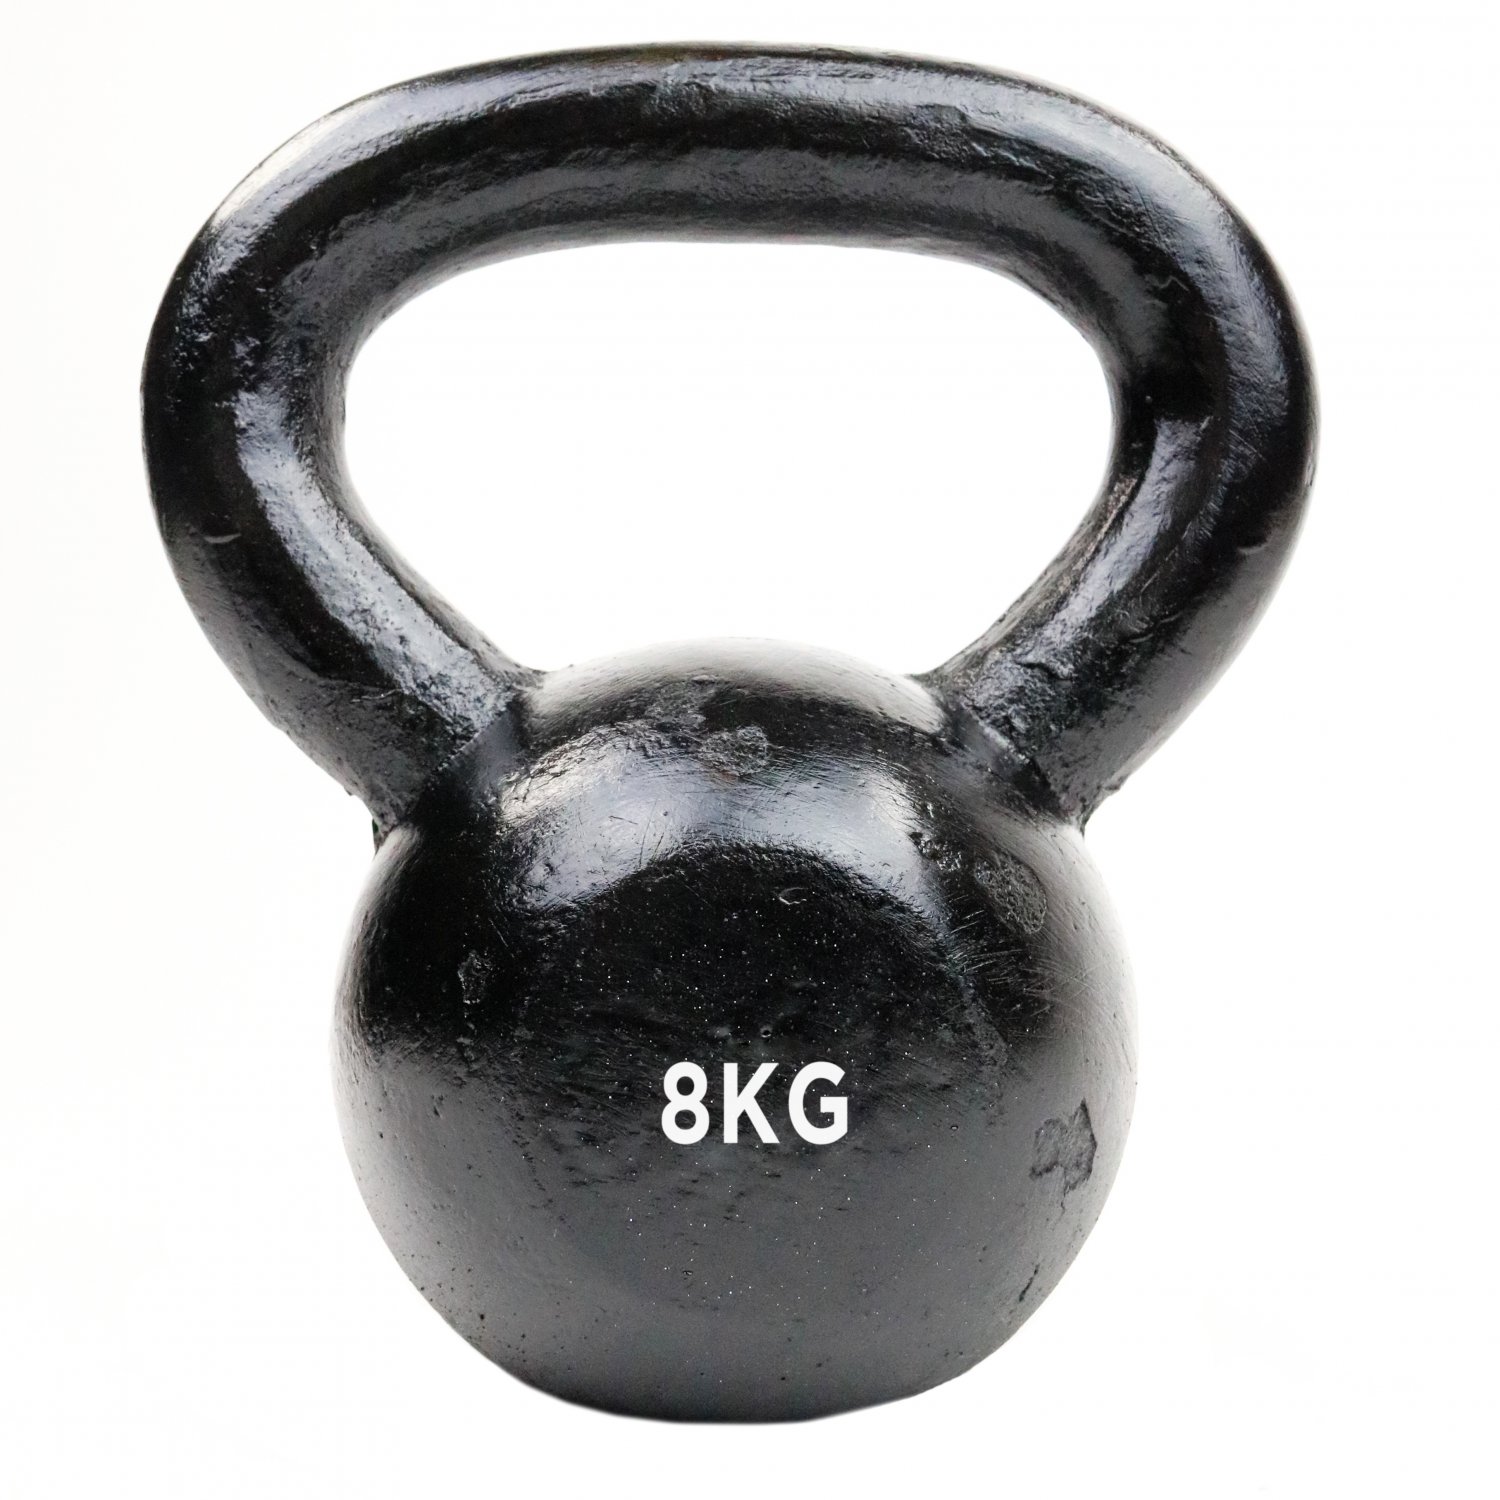 8kg Cast Iron Kettlebell Weight Training Fitness Workout Gym